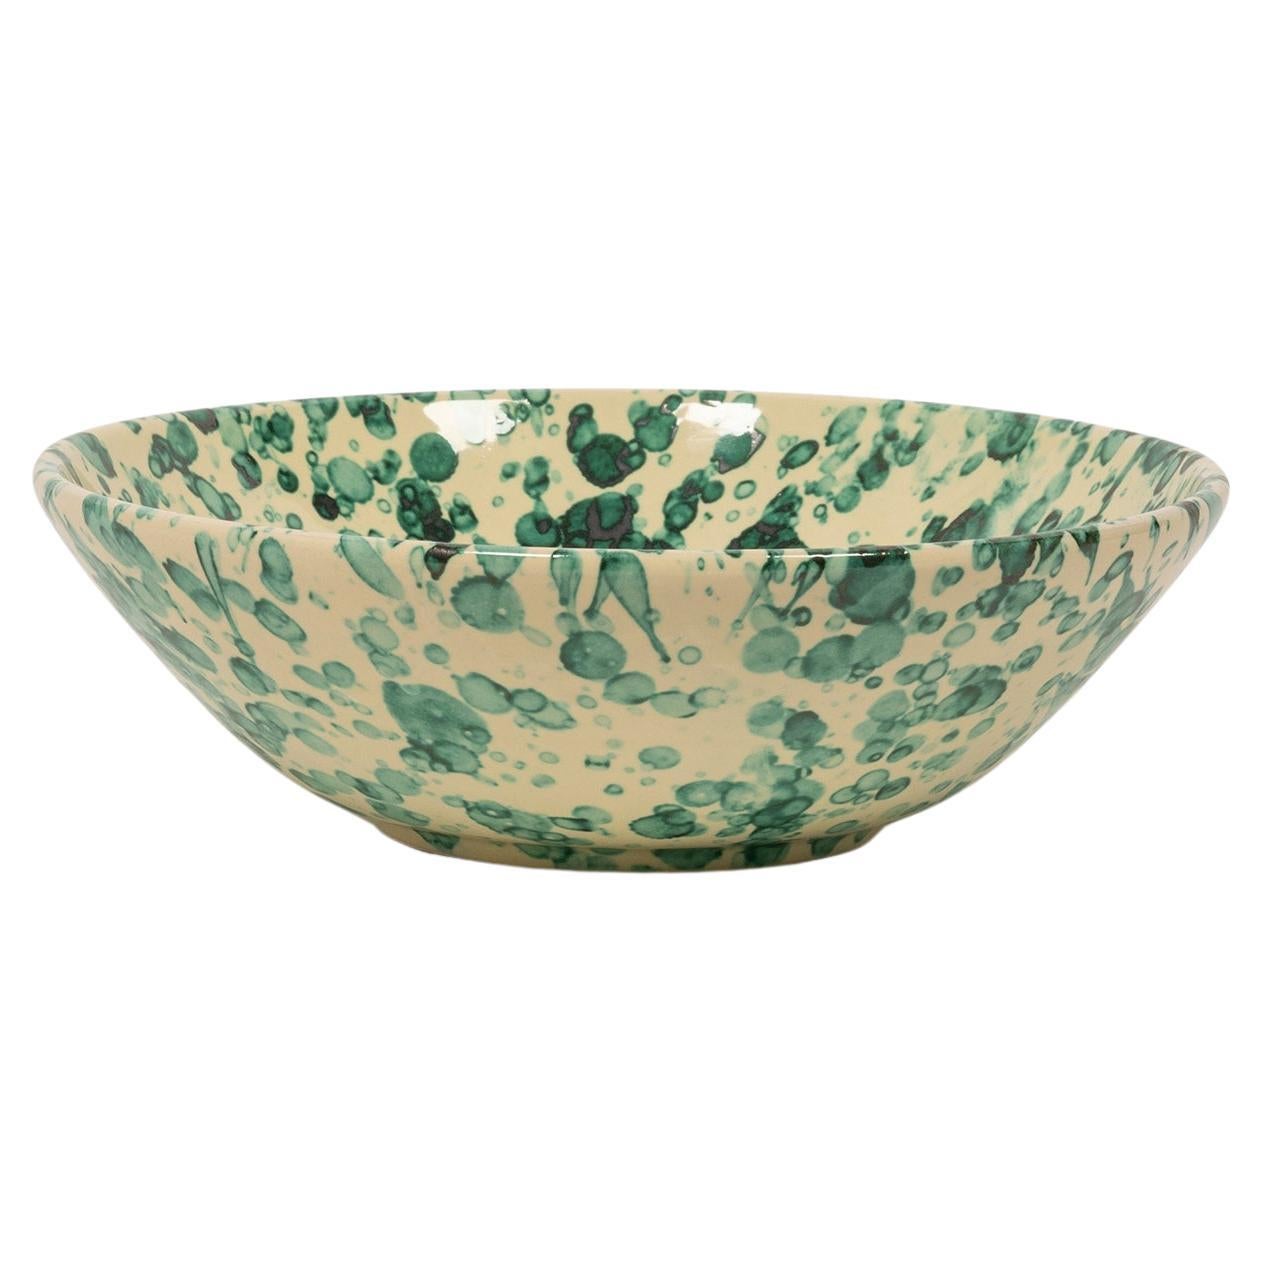 Splatter Bowl, Large, green